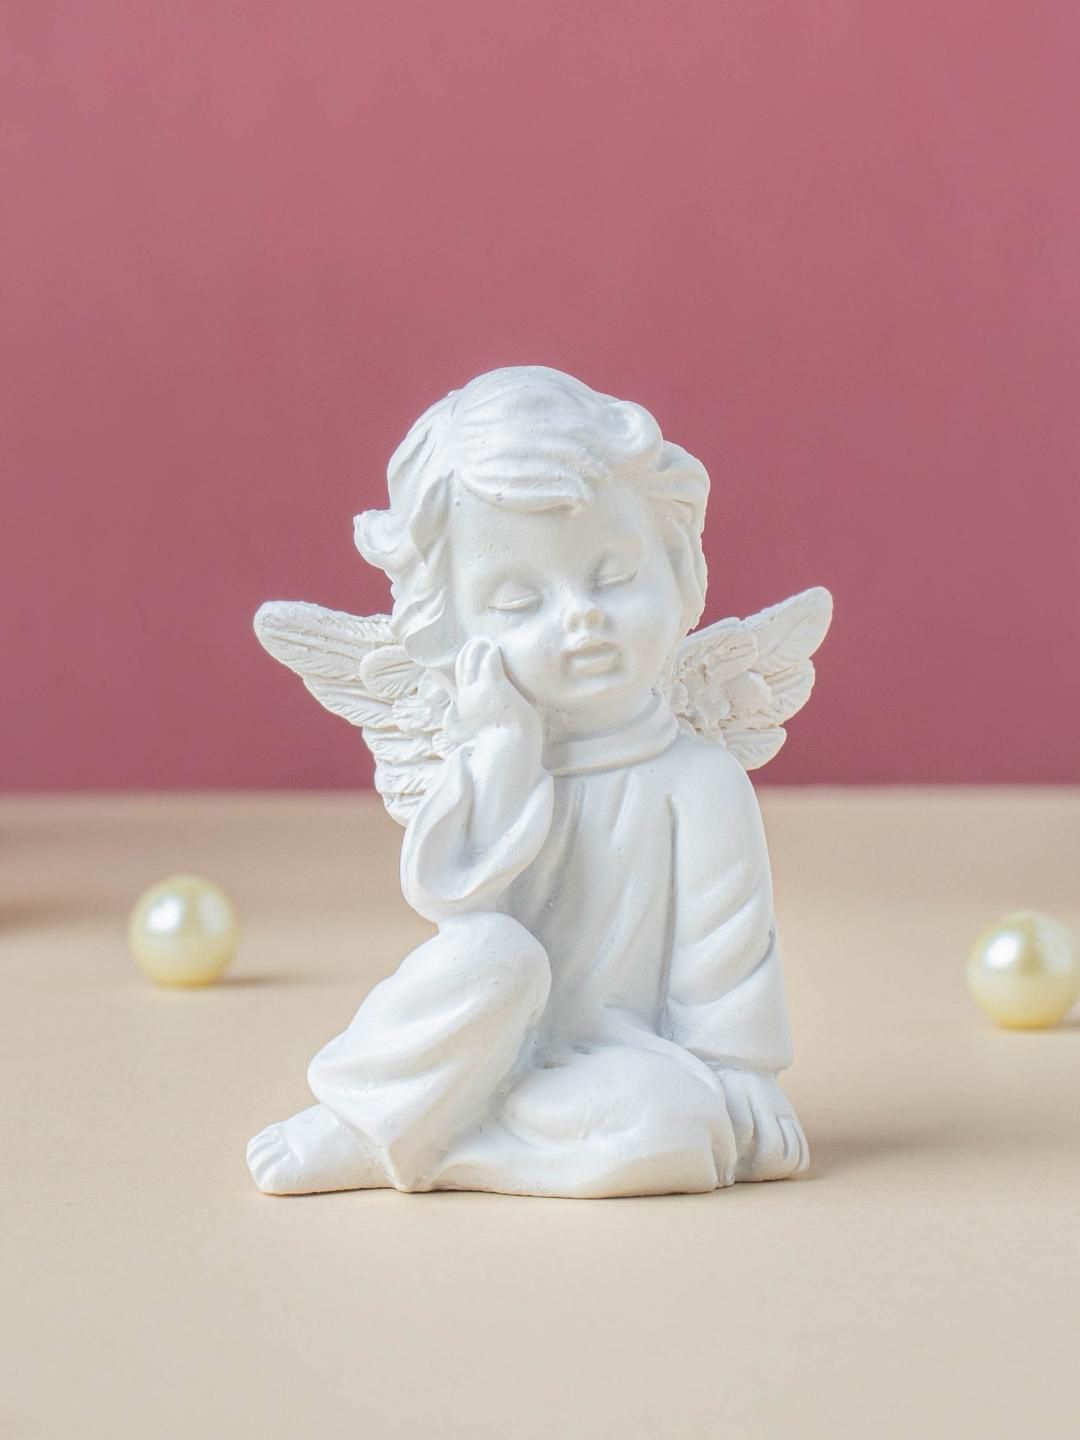 Nestasia White Solid Sitting Angel Figurine Price in India